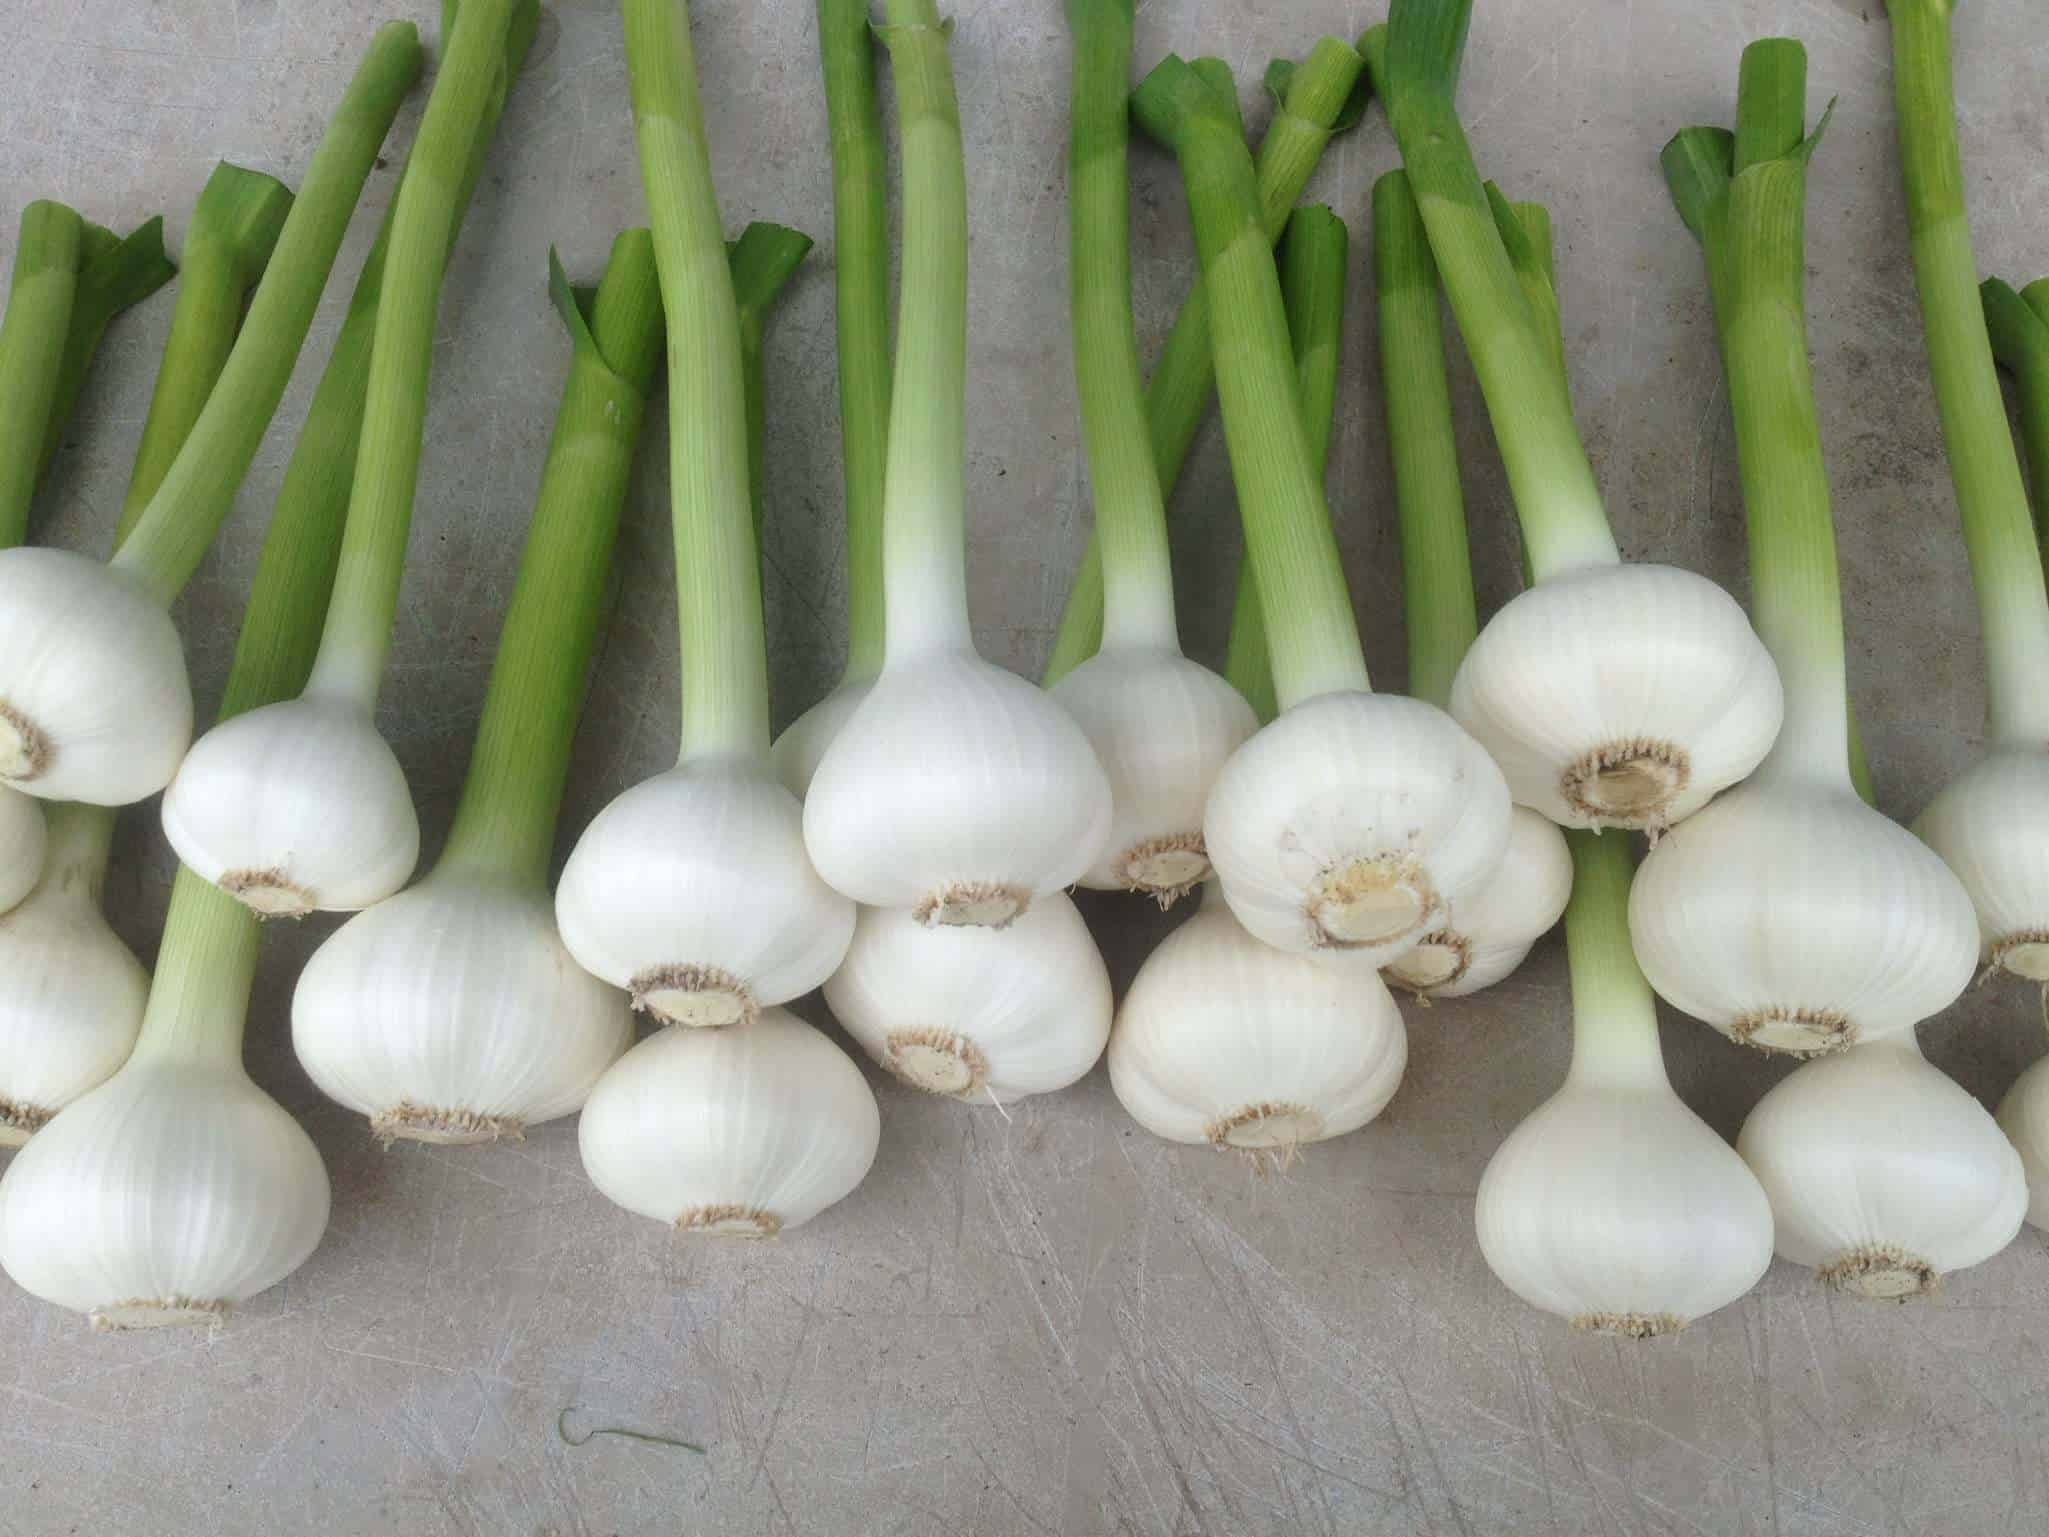 Hopeful Garlic (Can you see it?)